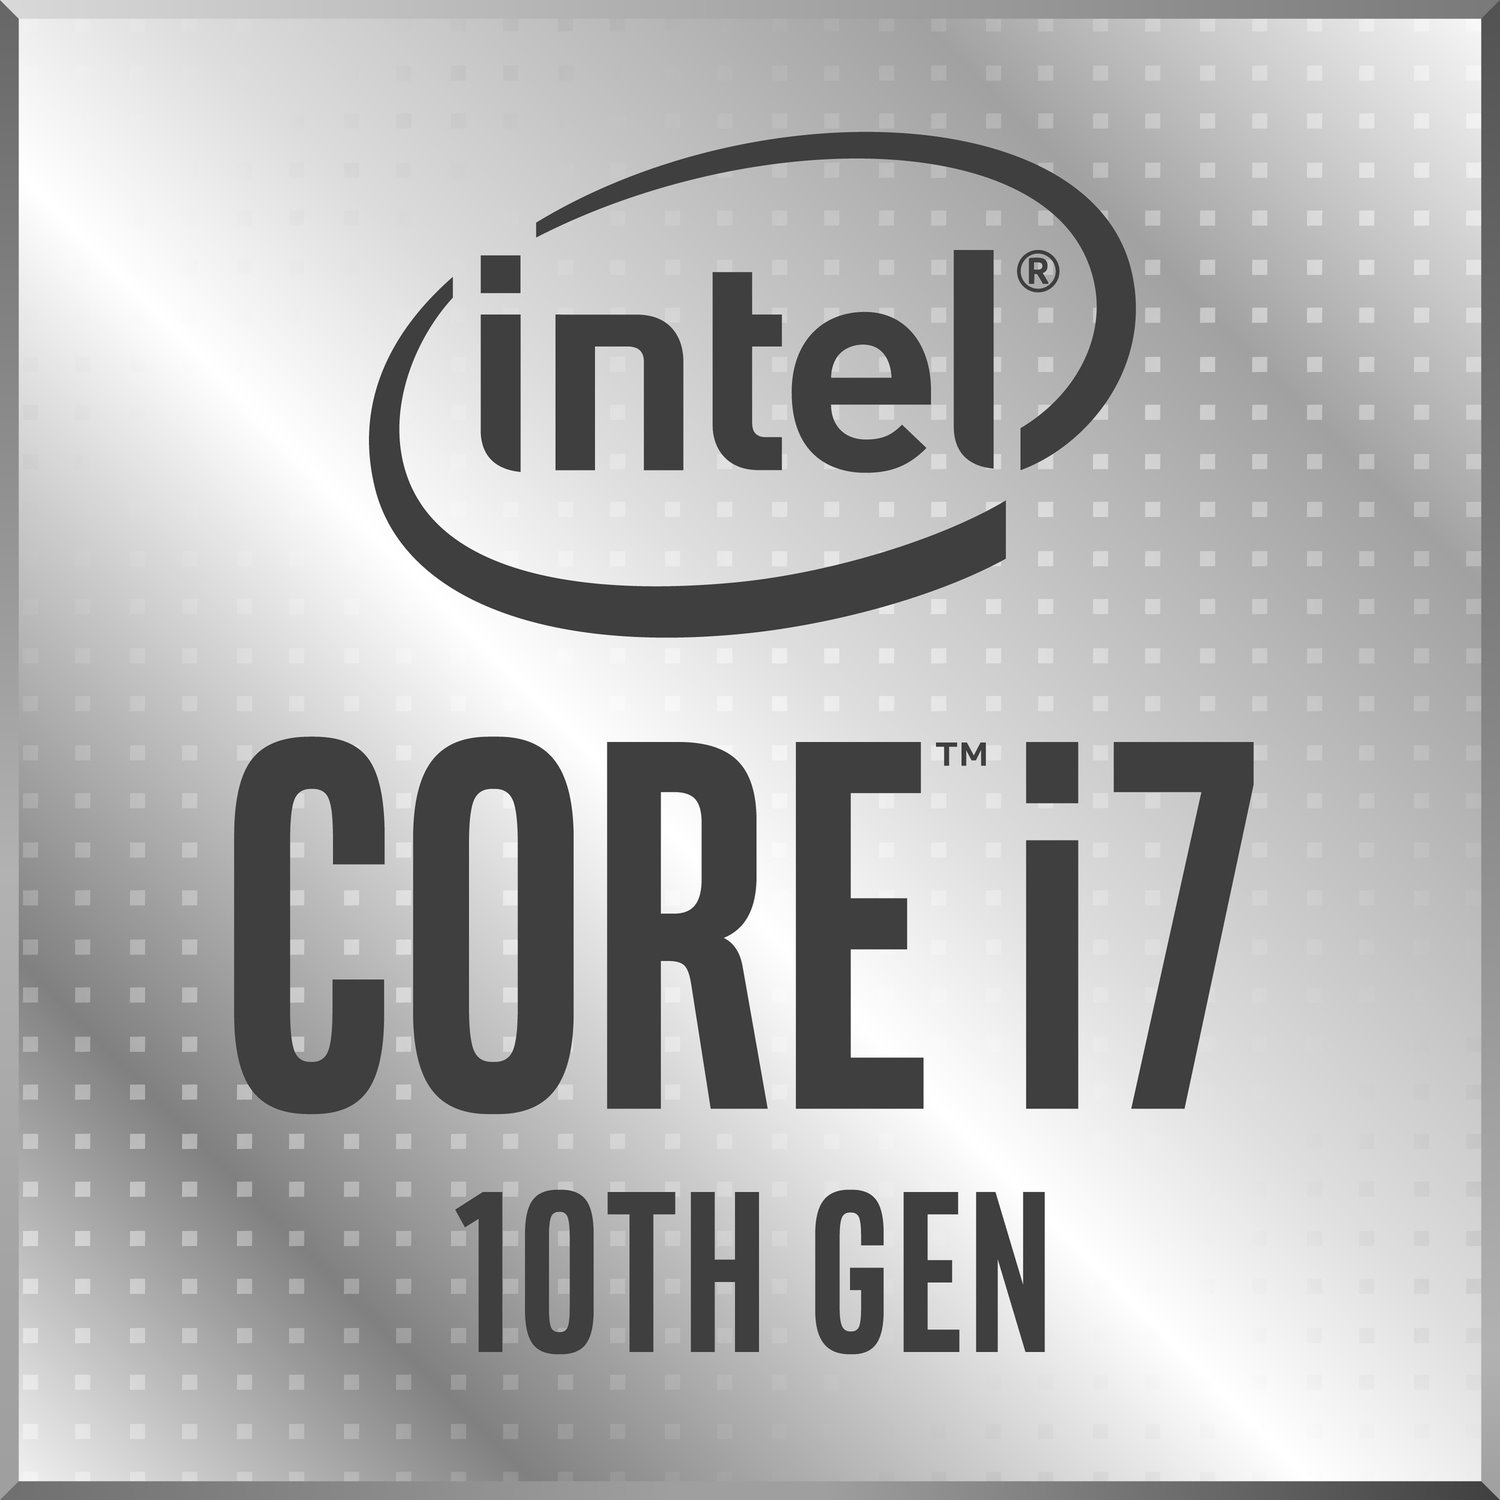 Intel Core i7 (10th Gen) i7-10700KF Octa-core (8 Core) 3.80 GHz Processor - Retail Pack